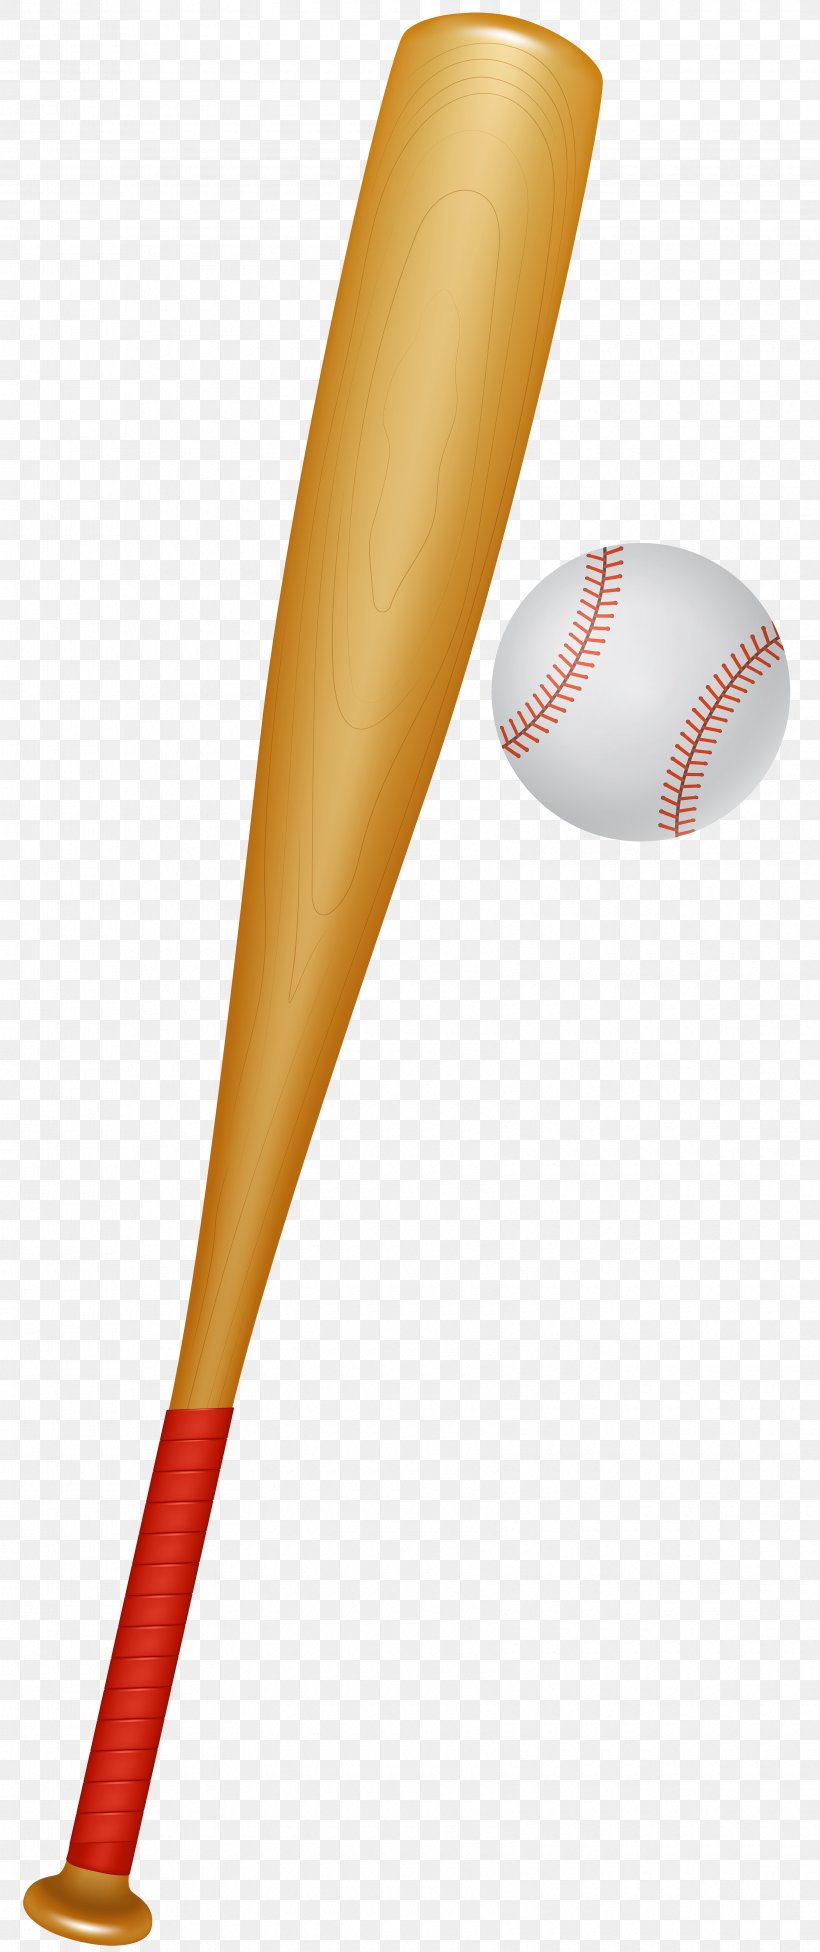 Baseball Bats Clip Art Ball Game, PNG, 3360x8000px, Baseball Bats, Ball, Ball Game, Baseball, Baseball Bat Download Free